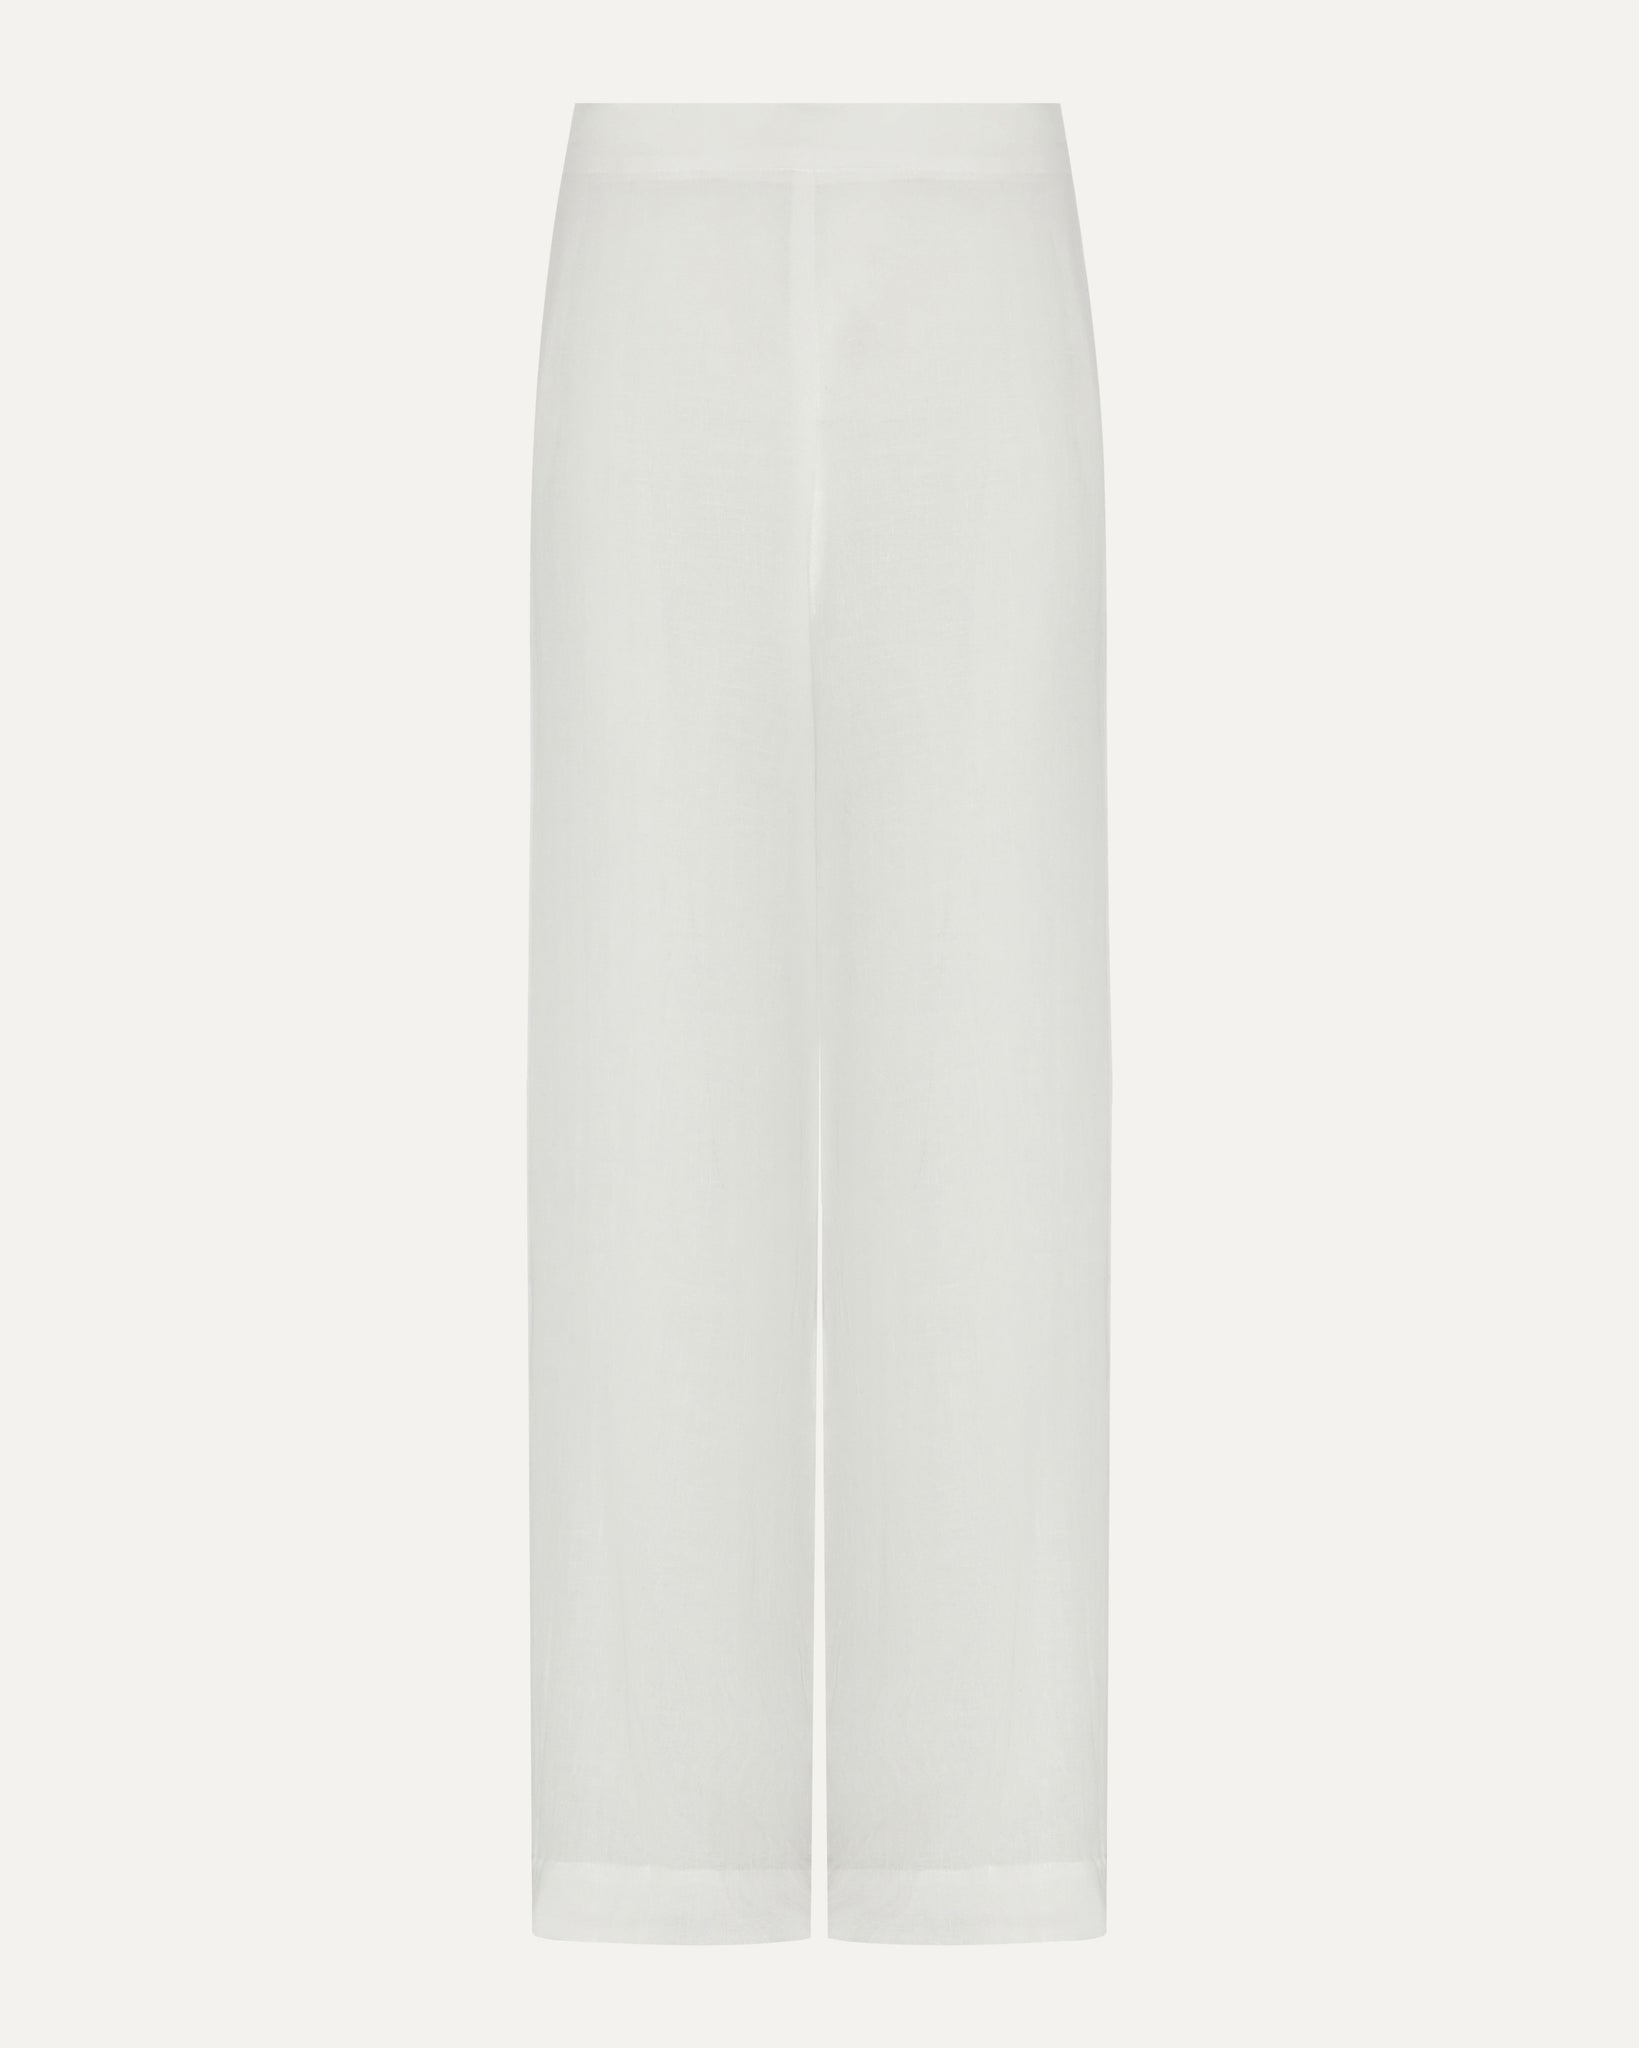 JASMIN - Ivory Linen Trousers